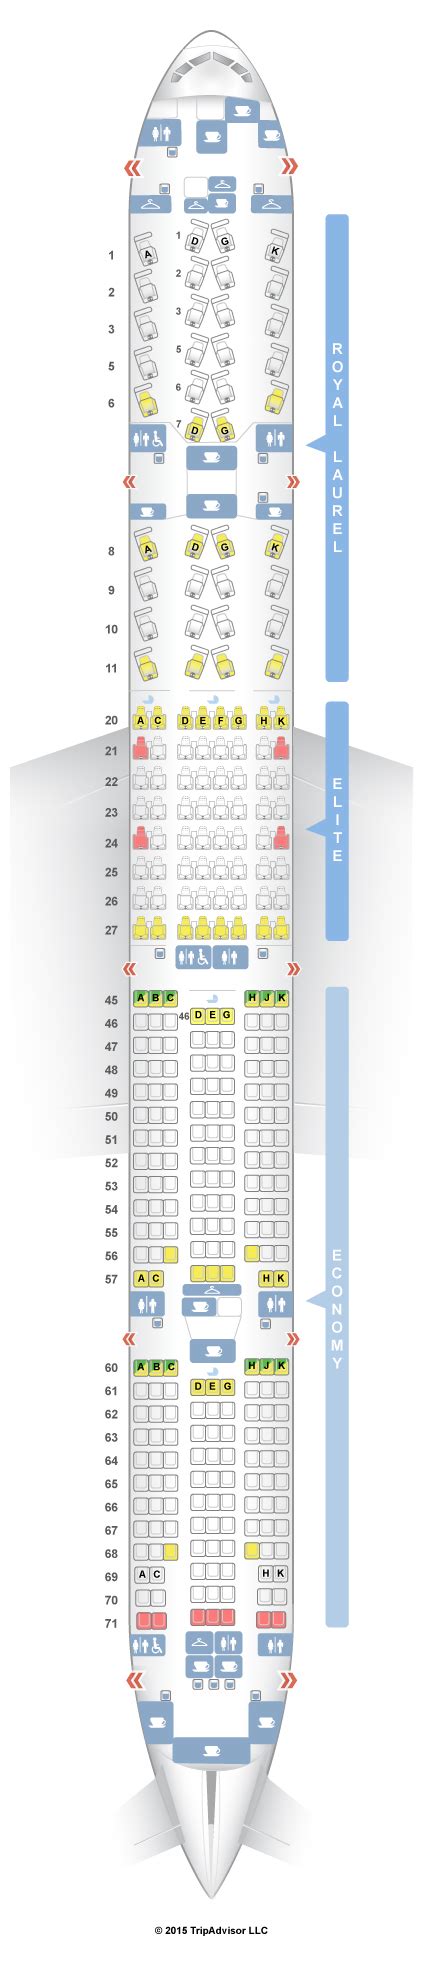 Seatguru Seat Map Eva Air Boeing 777 300er 77n77w V1